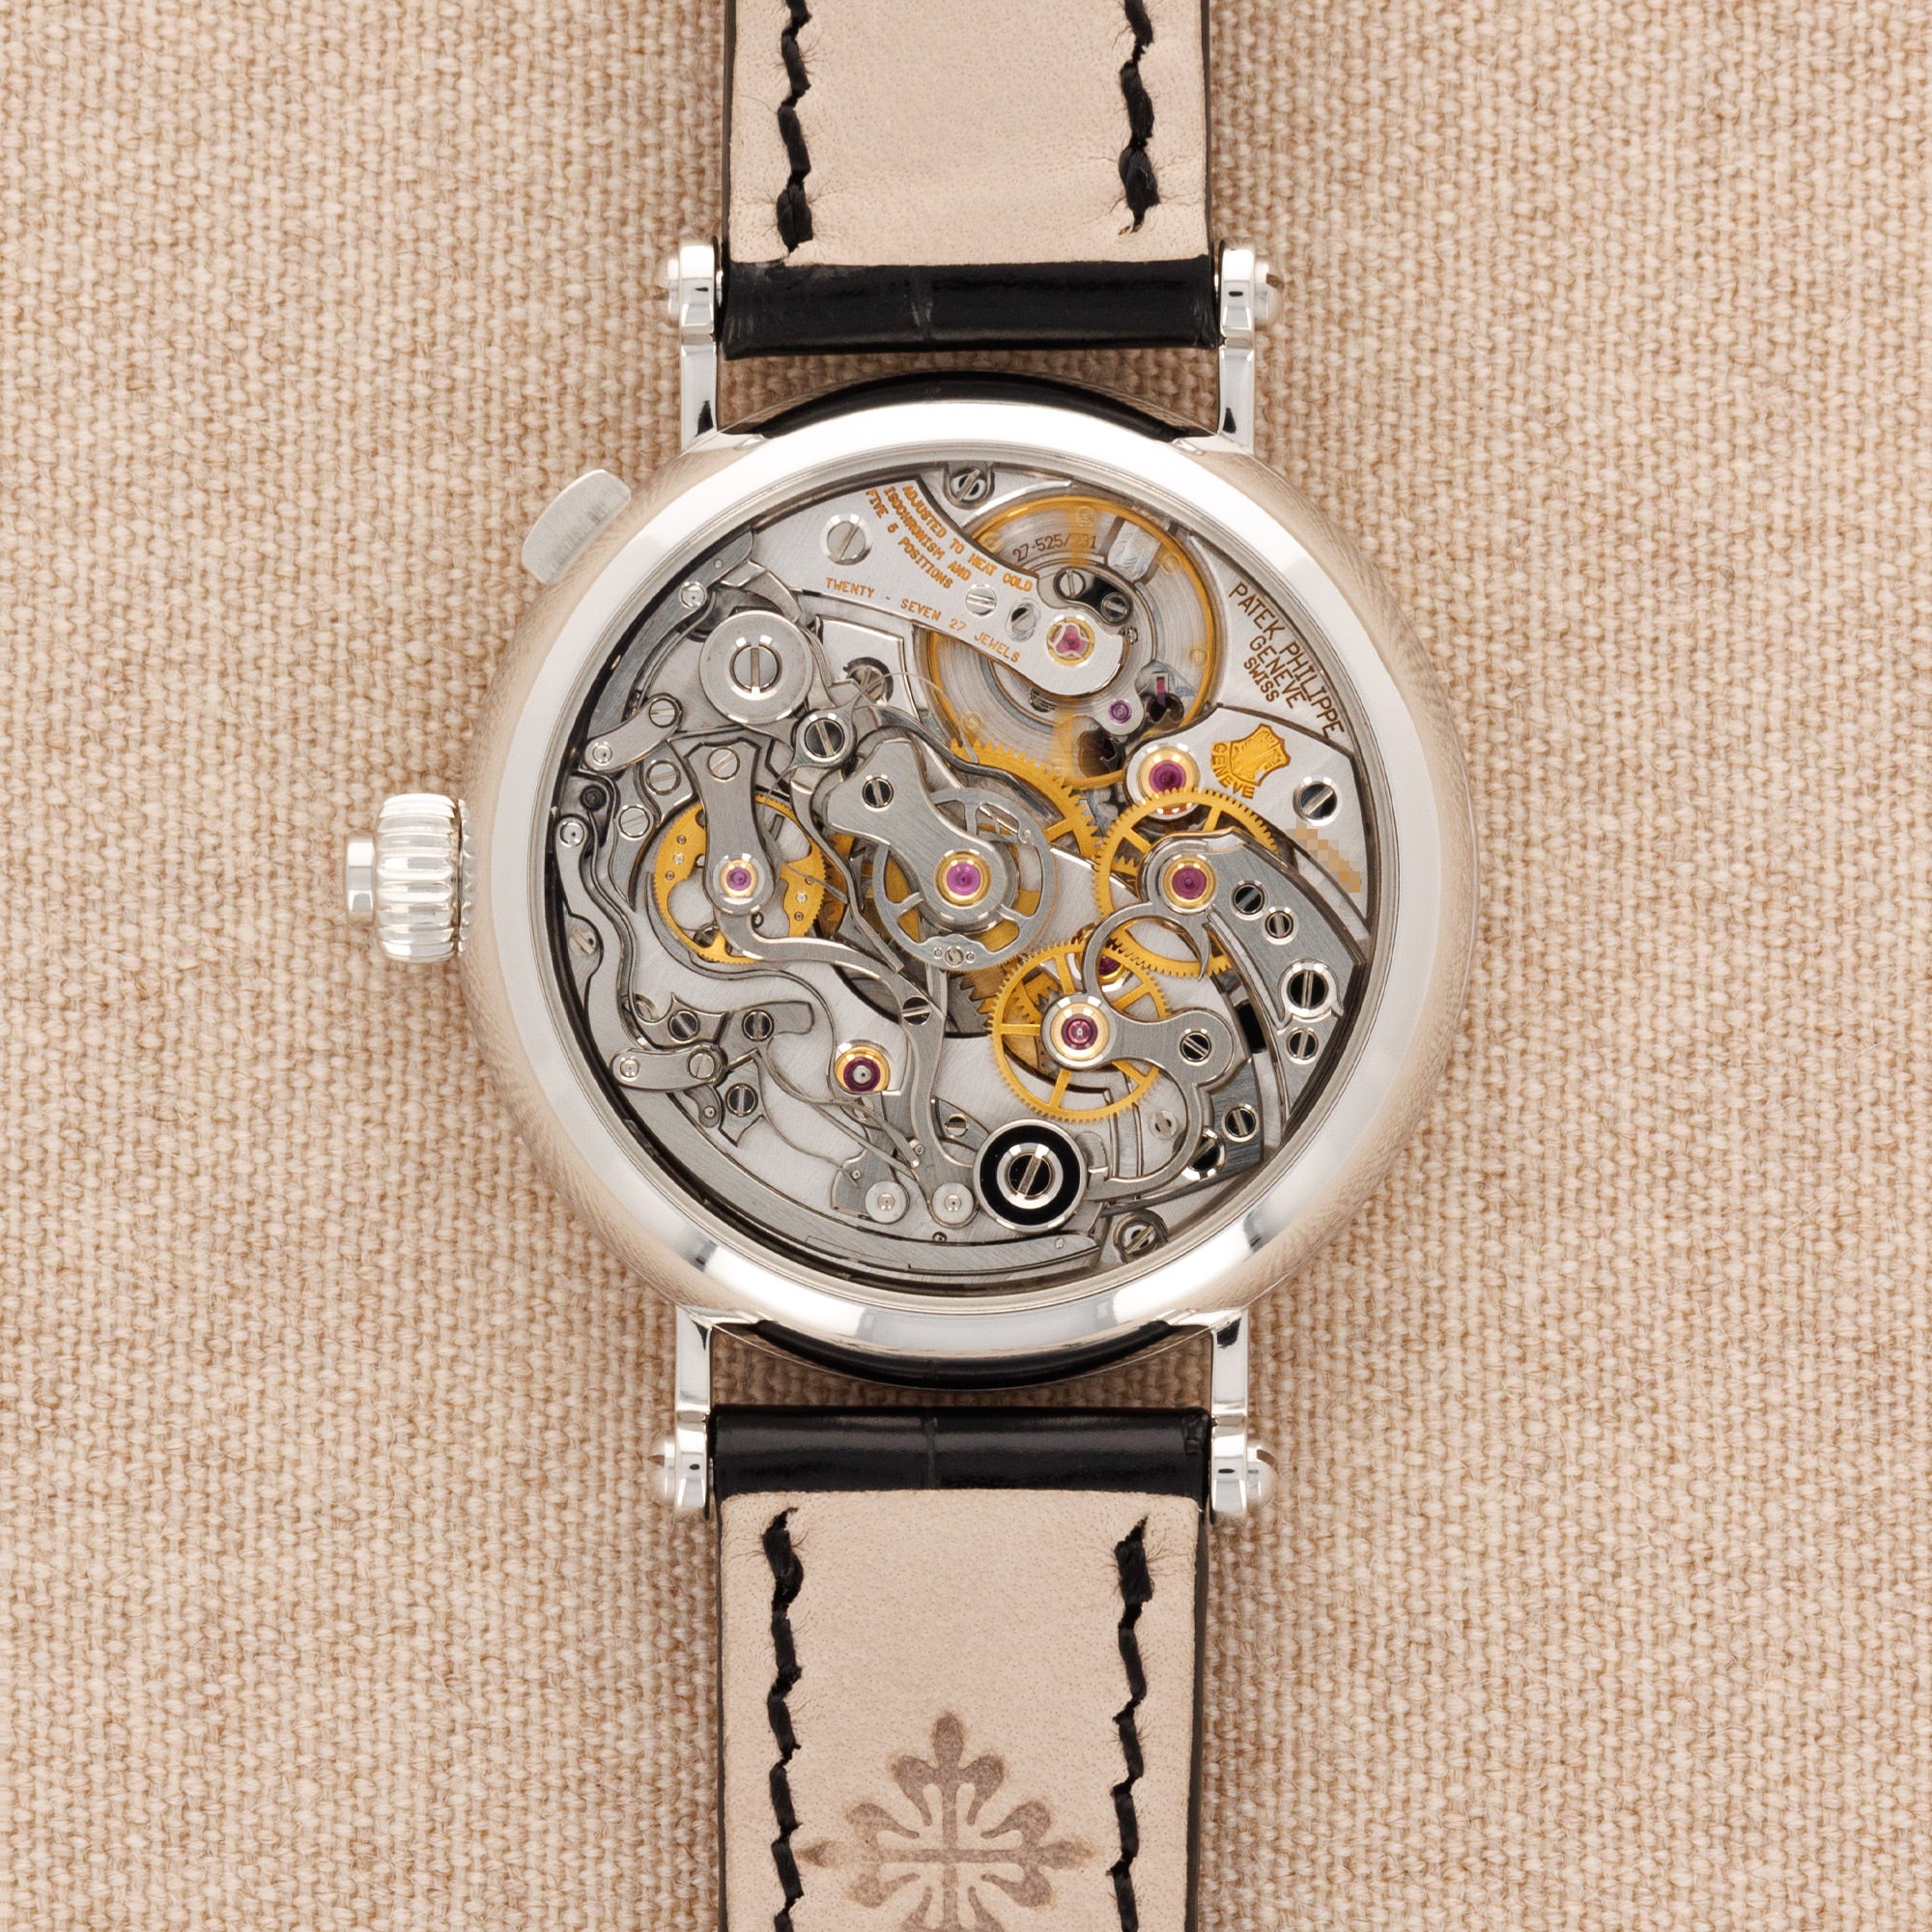 Patek Philippe - Patek Philippe Unique Platinum Monopusher Split Seconds Chronograph Ref. 5959 - The Keystone Watches